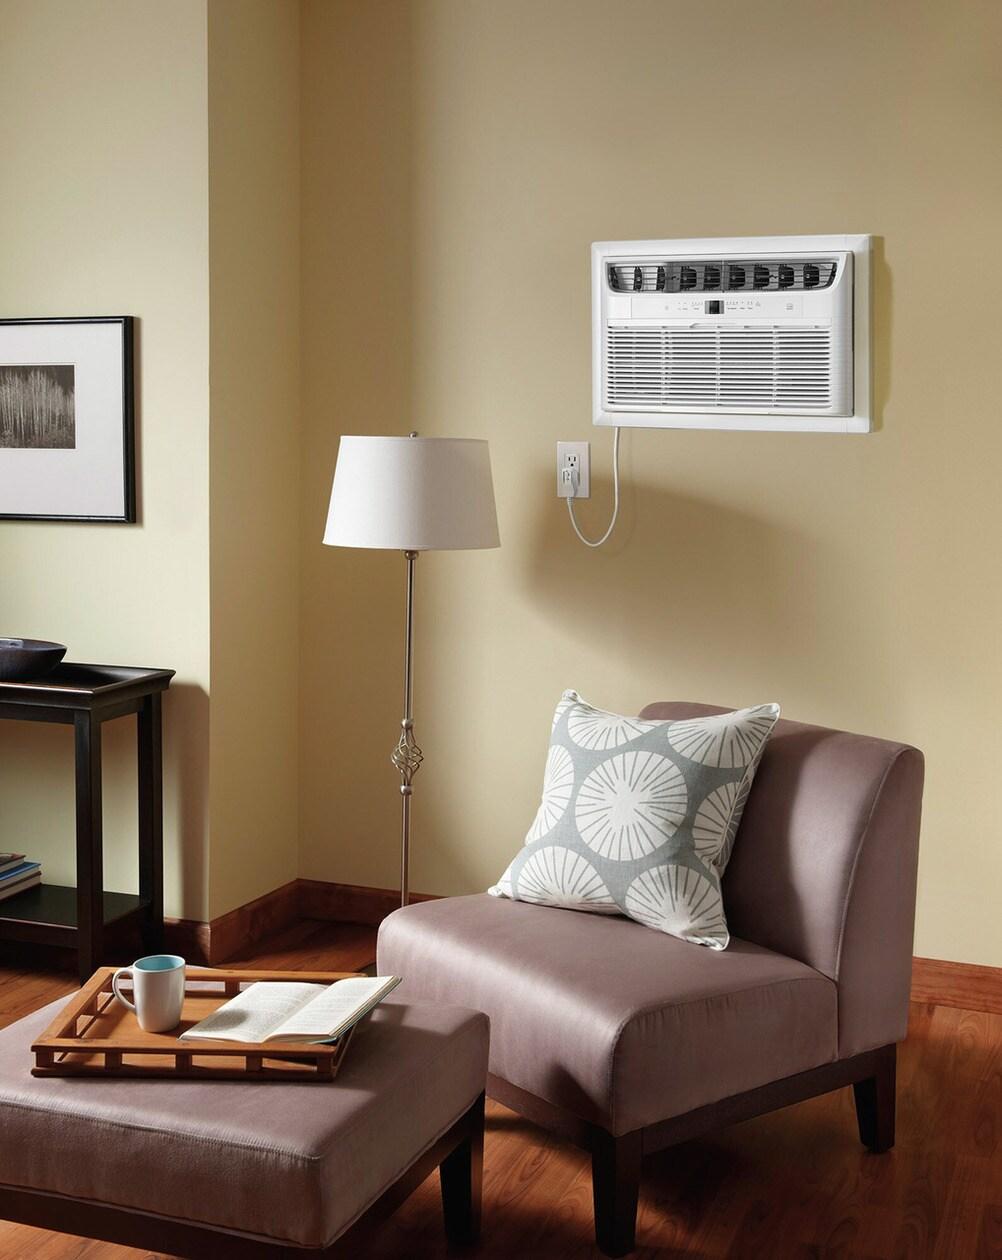 Frigidaire 10,000 BTU Built-In Room Air Conditioner with Supplemental Heat